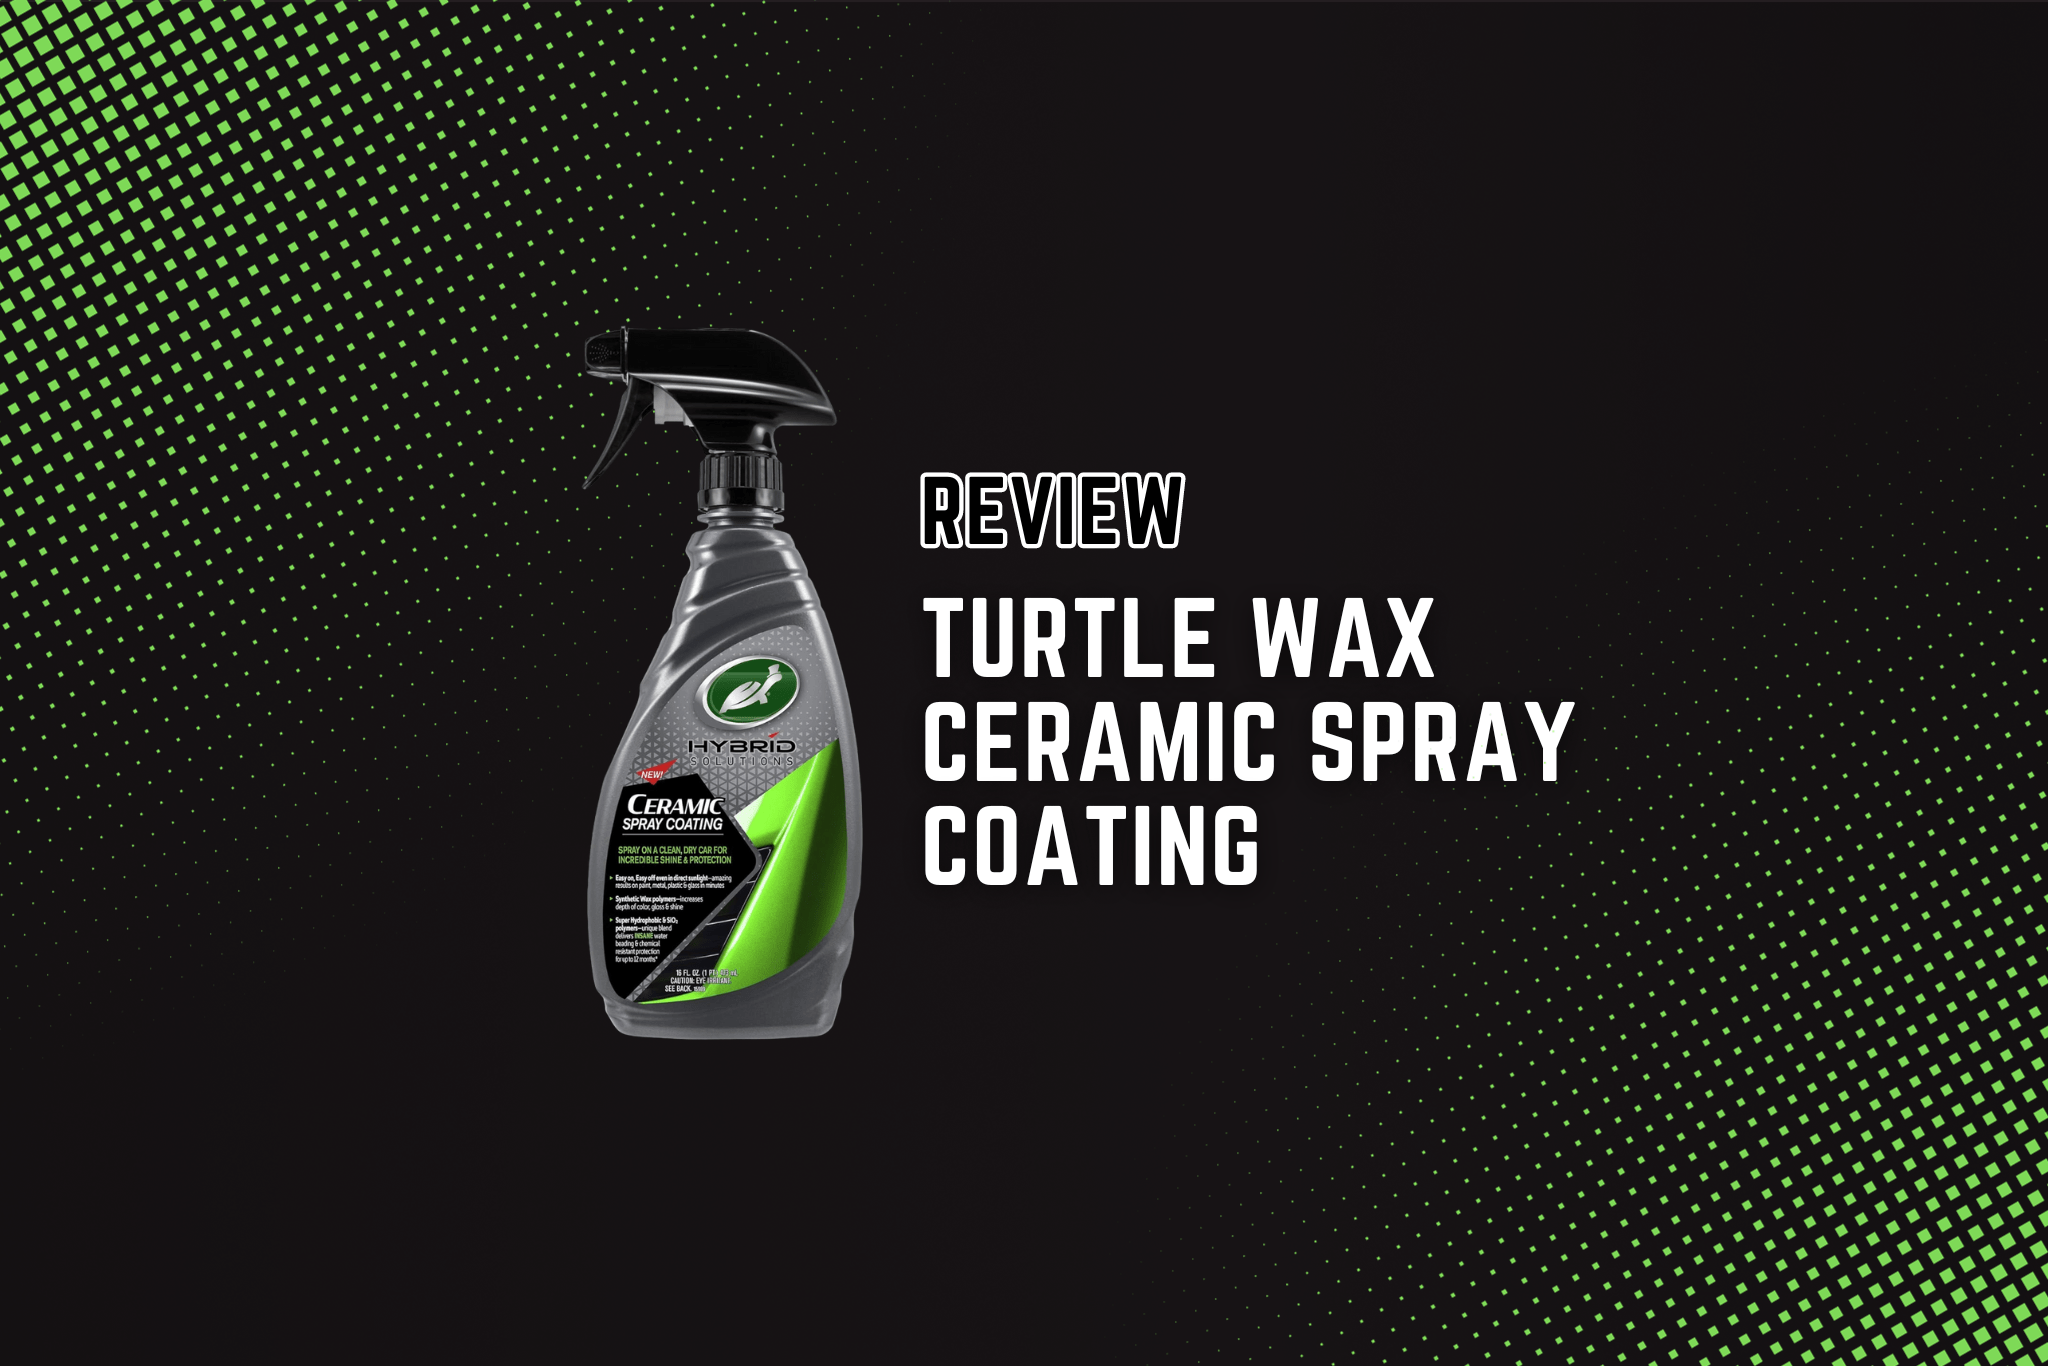 Turtle Wax Ceramic Spray Coating Review